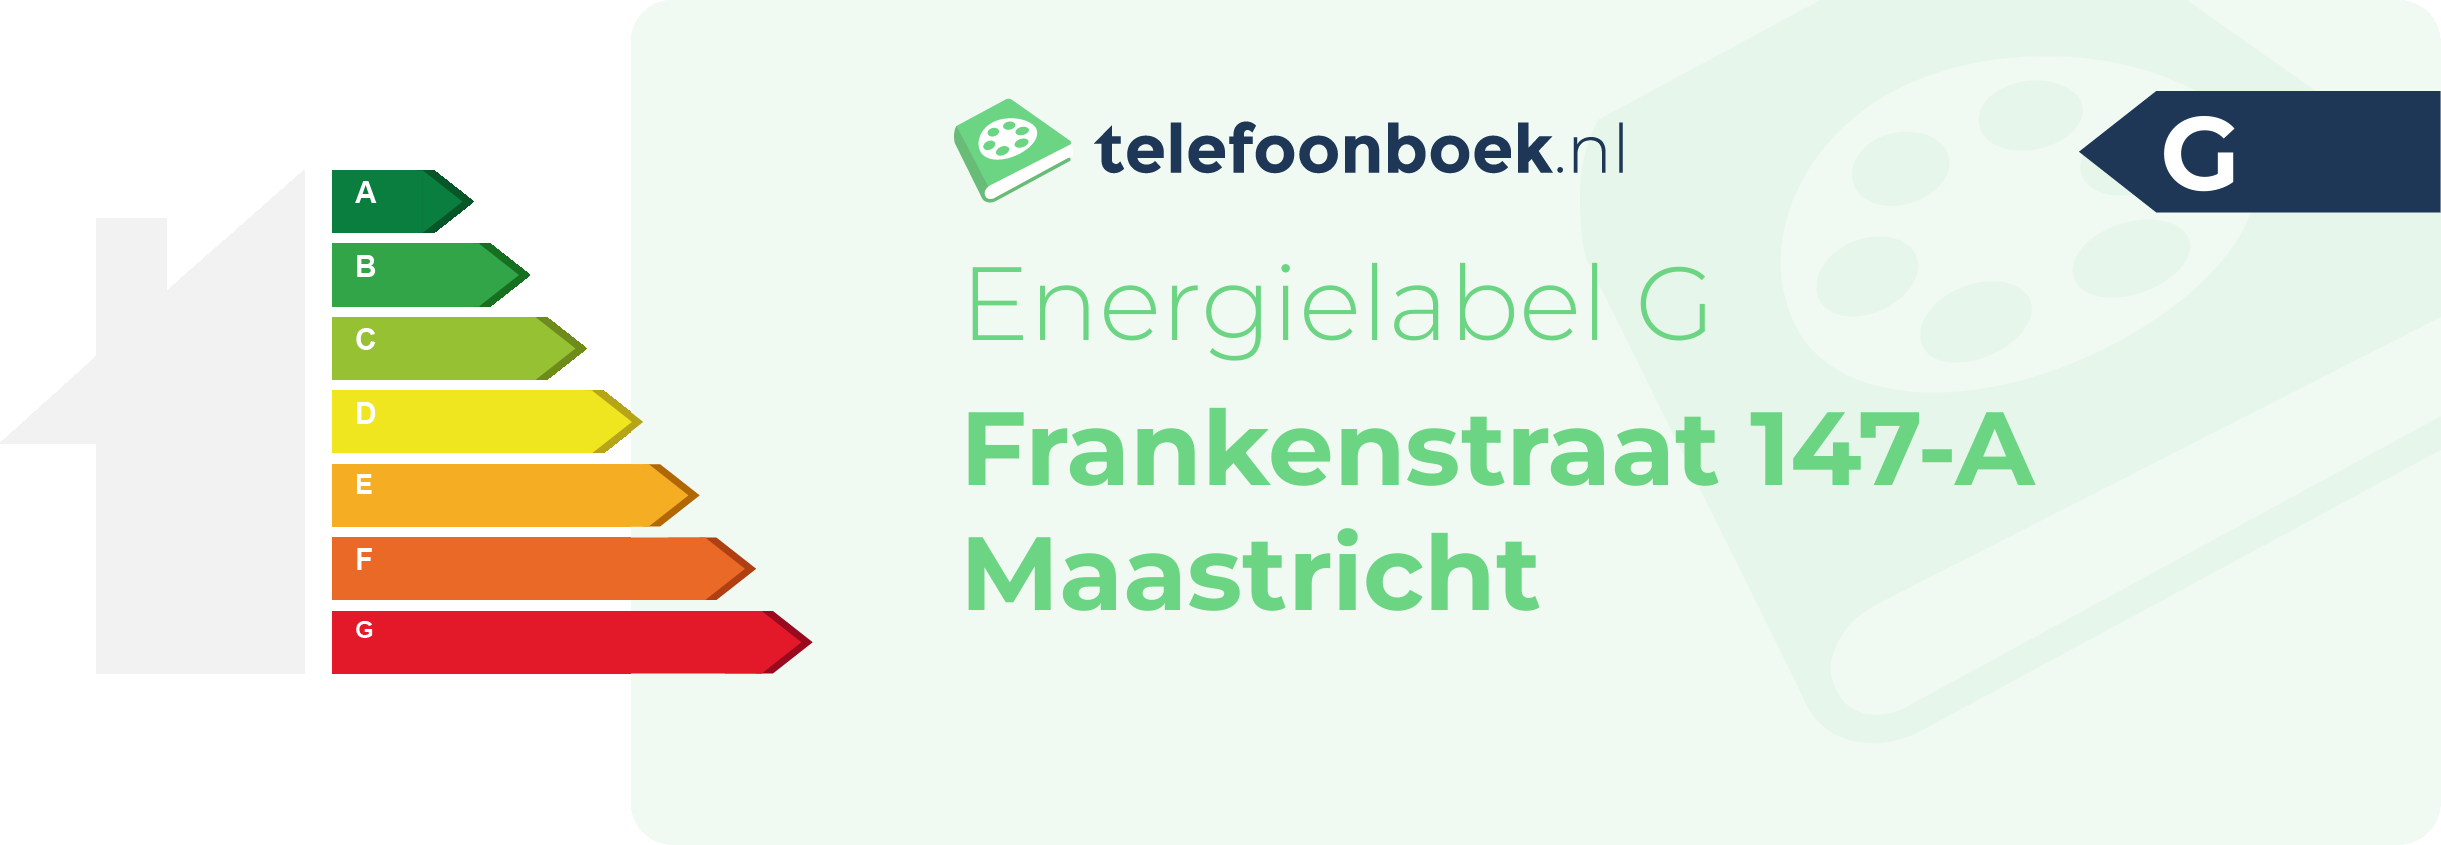 Energielabel Frankenstraat 147-A Maastricht